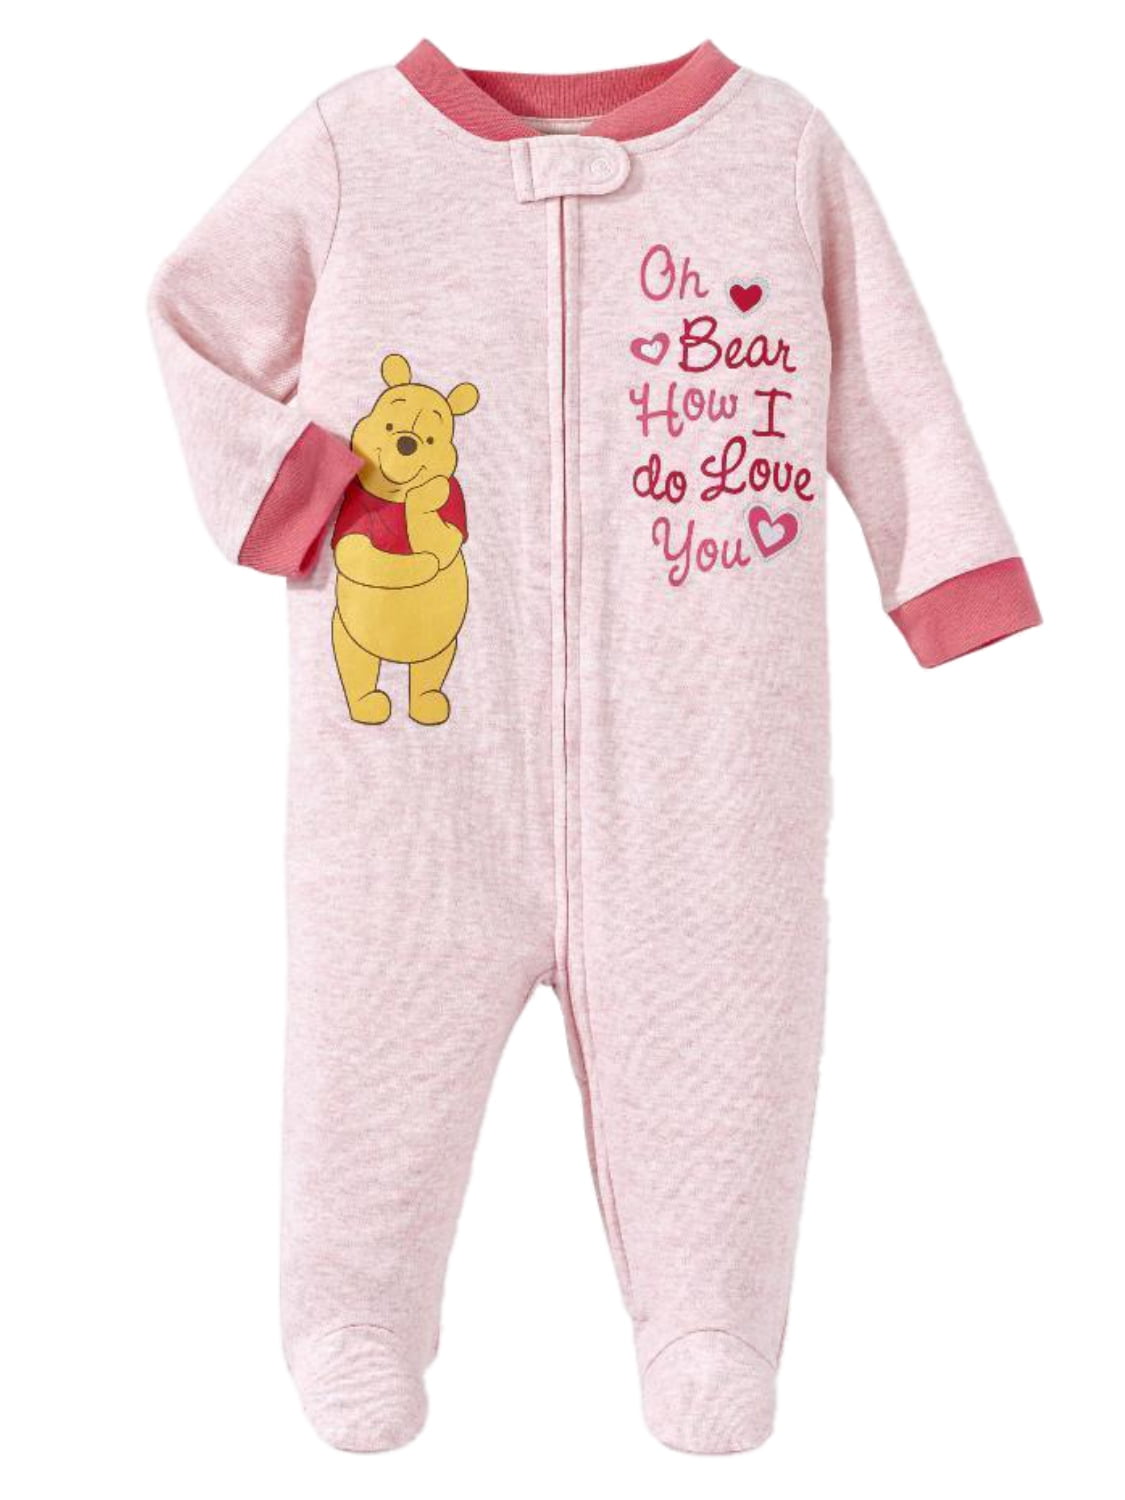 6 months  Brand New Disney Winnie the Pooh Fleece Sleepsuit .Boy Girl  Newborn